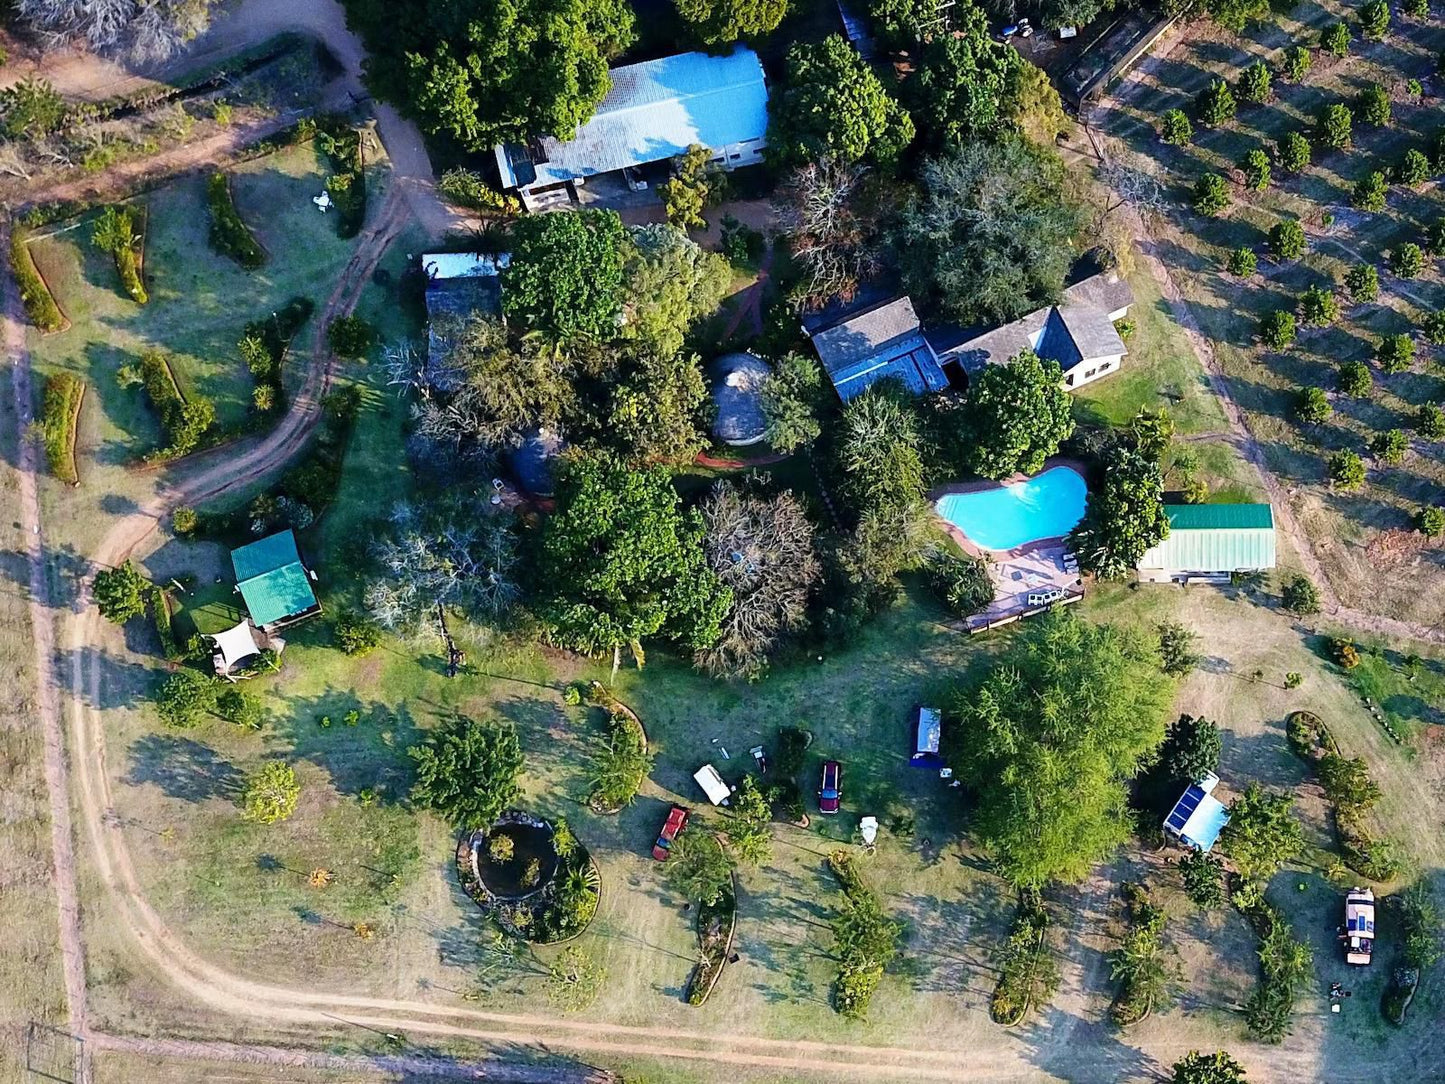 Kiaat Caravan Park Hazyview Mpumalanga South Africa Aerial Photography